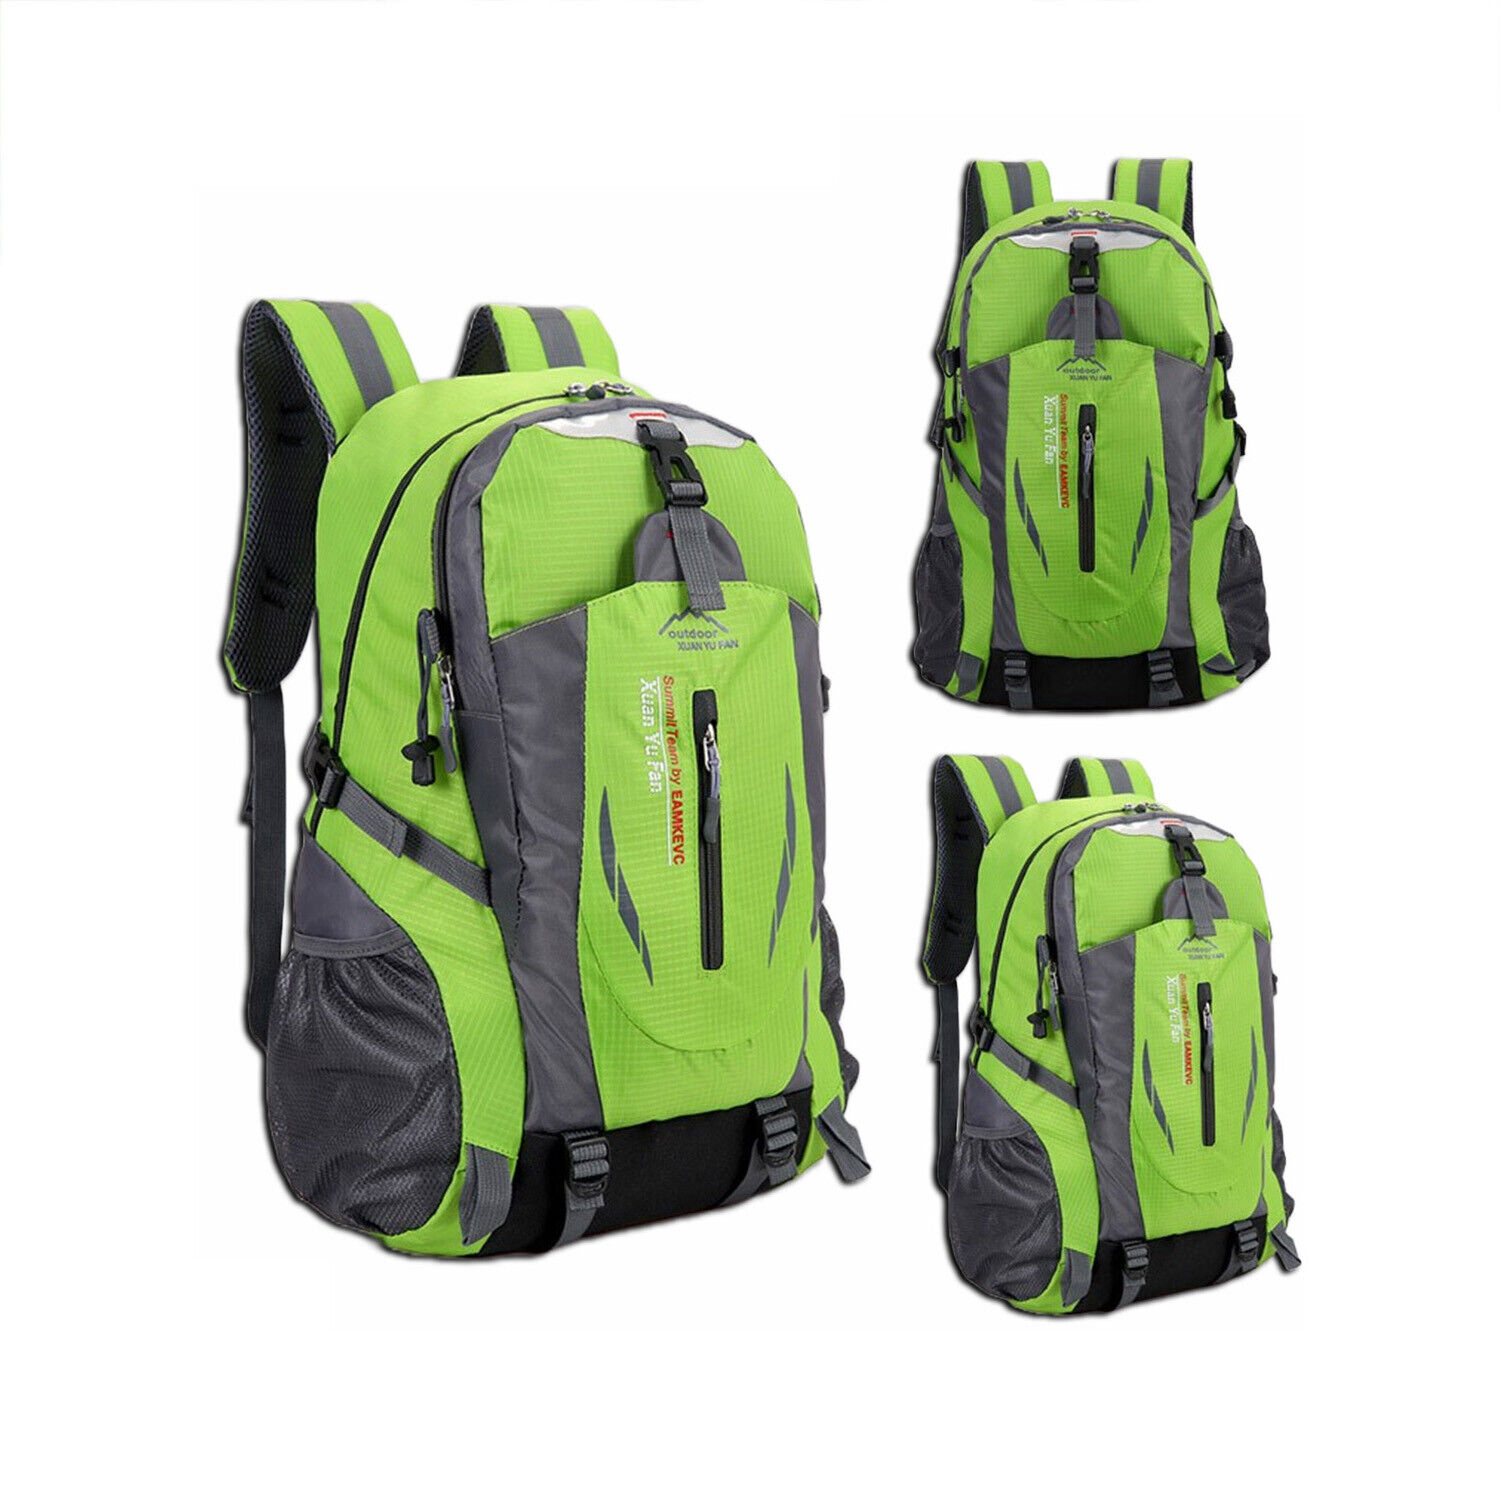 Versatile 40L Travel Backpack for Men and Women